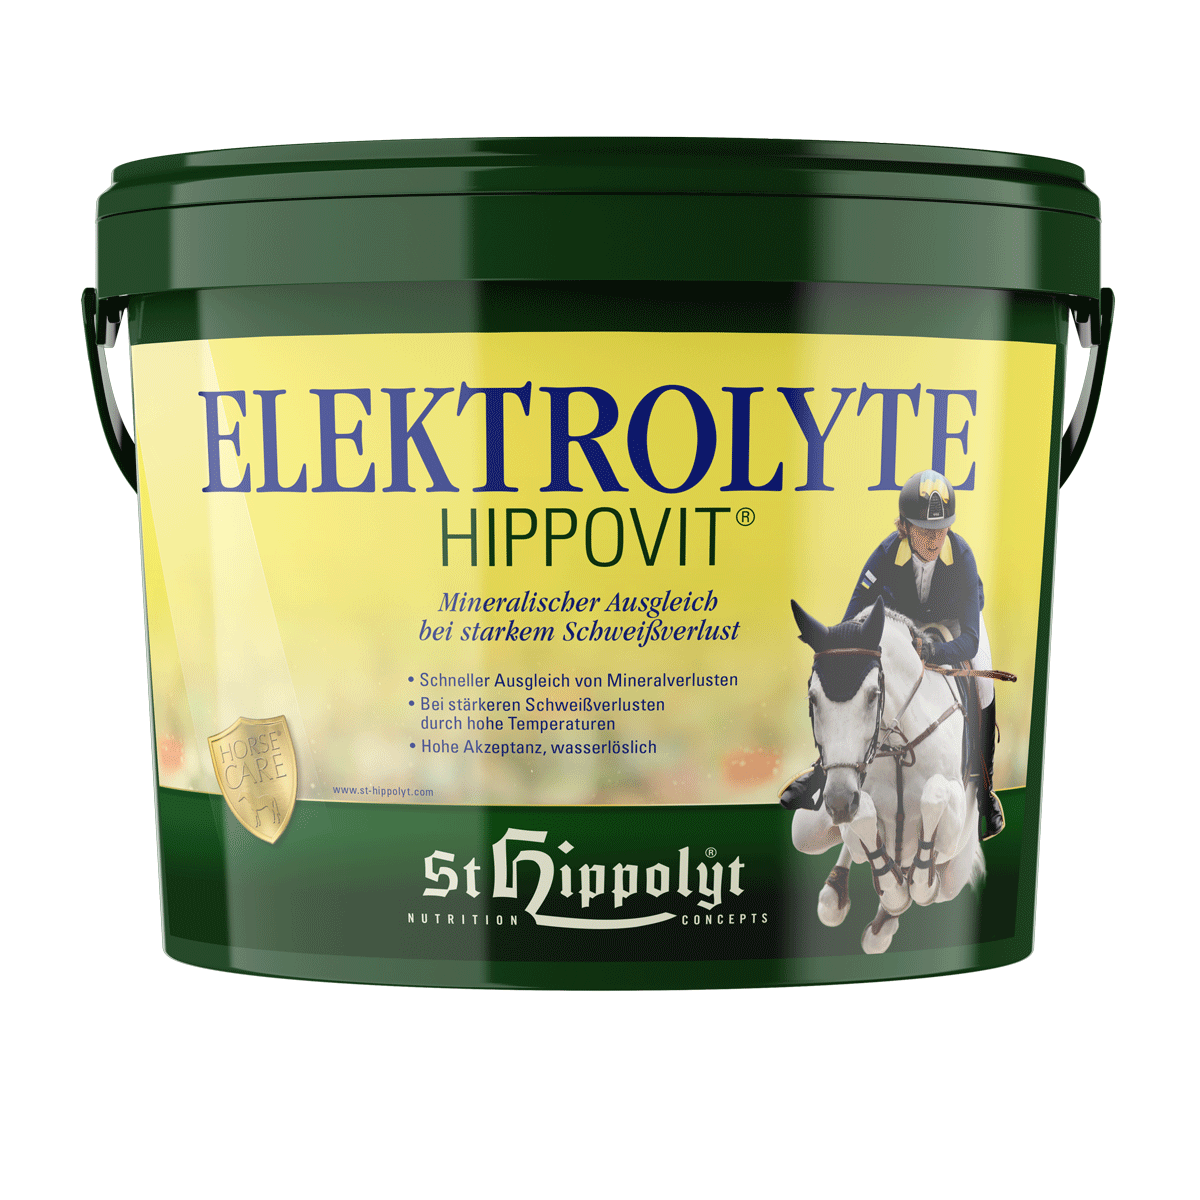 St Hippolyt Elektrolyte 2,5 kg